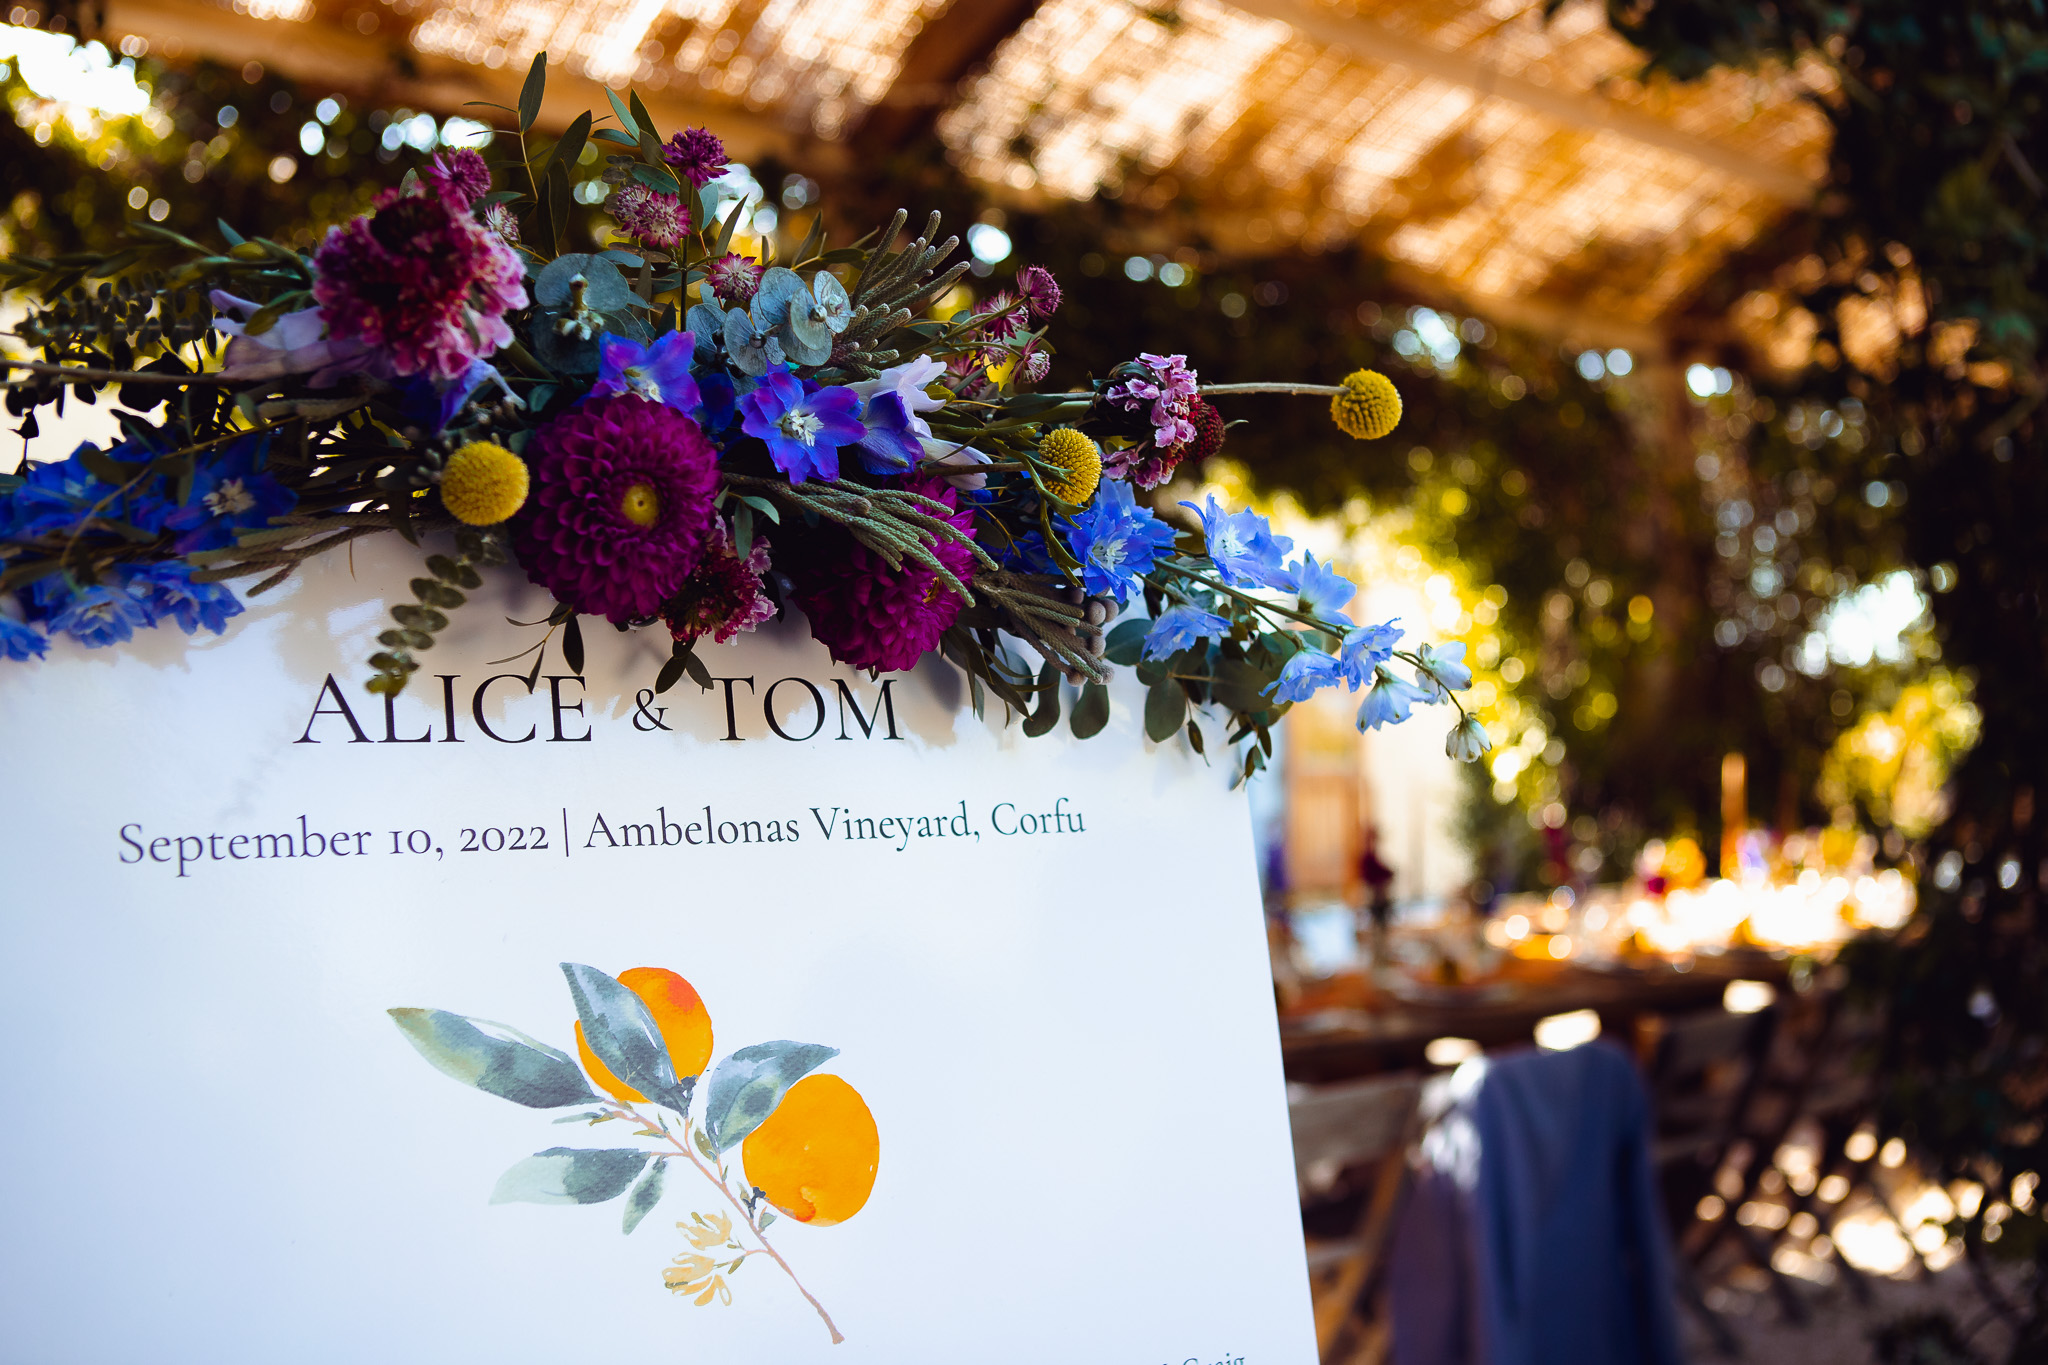 Wedding sign for Alice & Tom's wedding at Ambelonas Vineyard, Corfu, covered in flowers